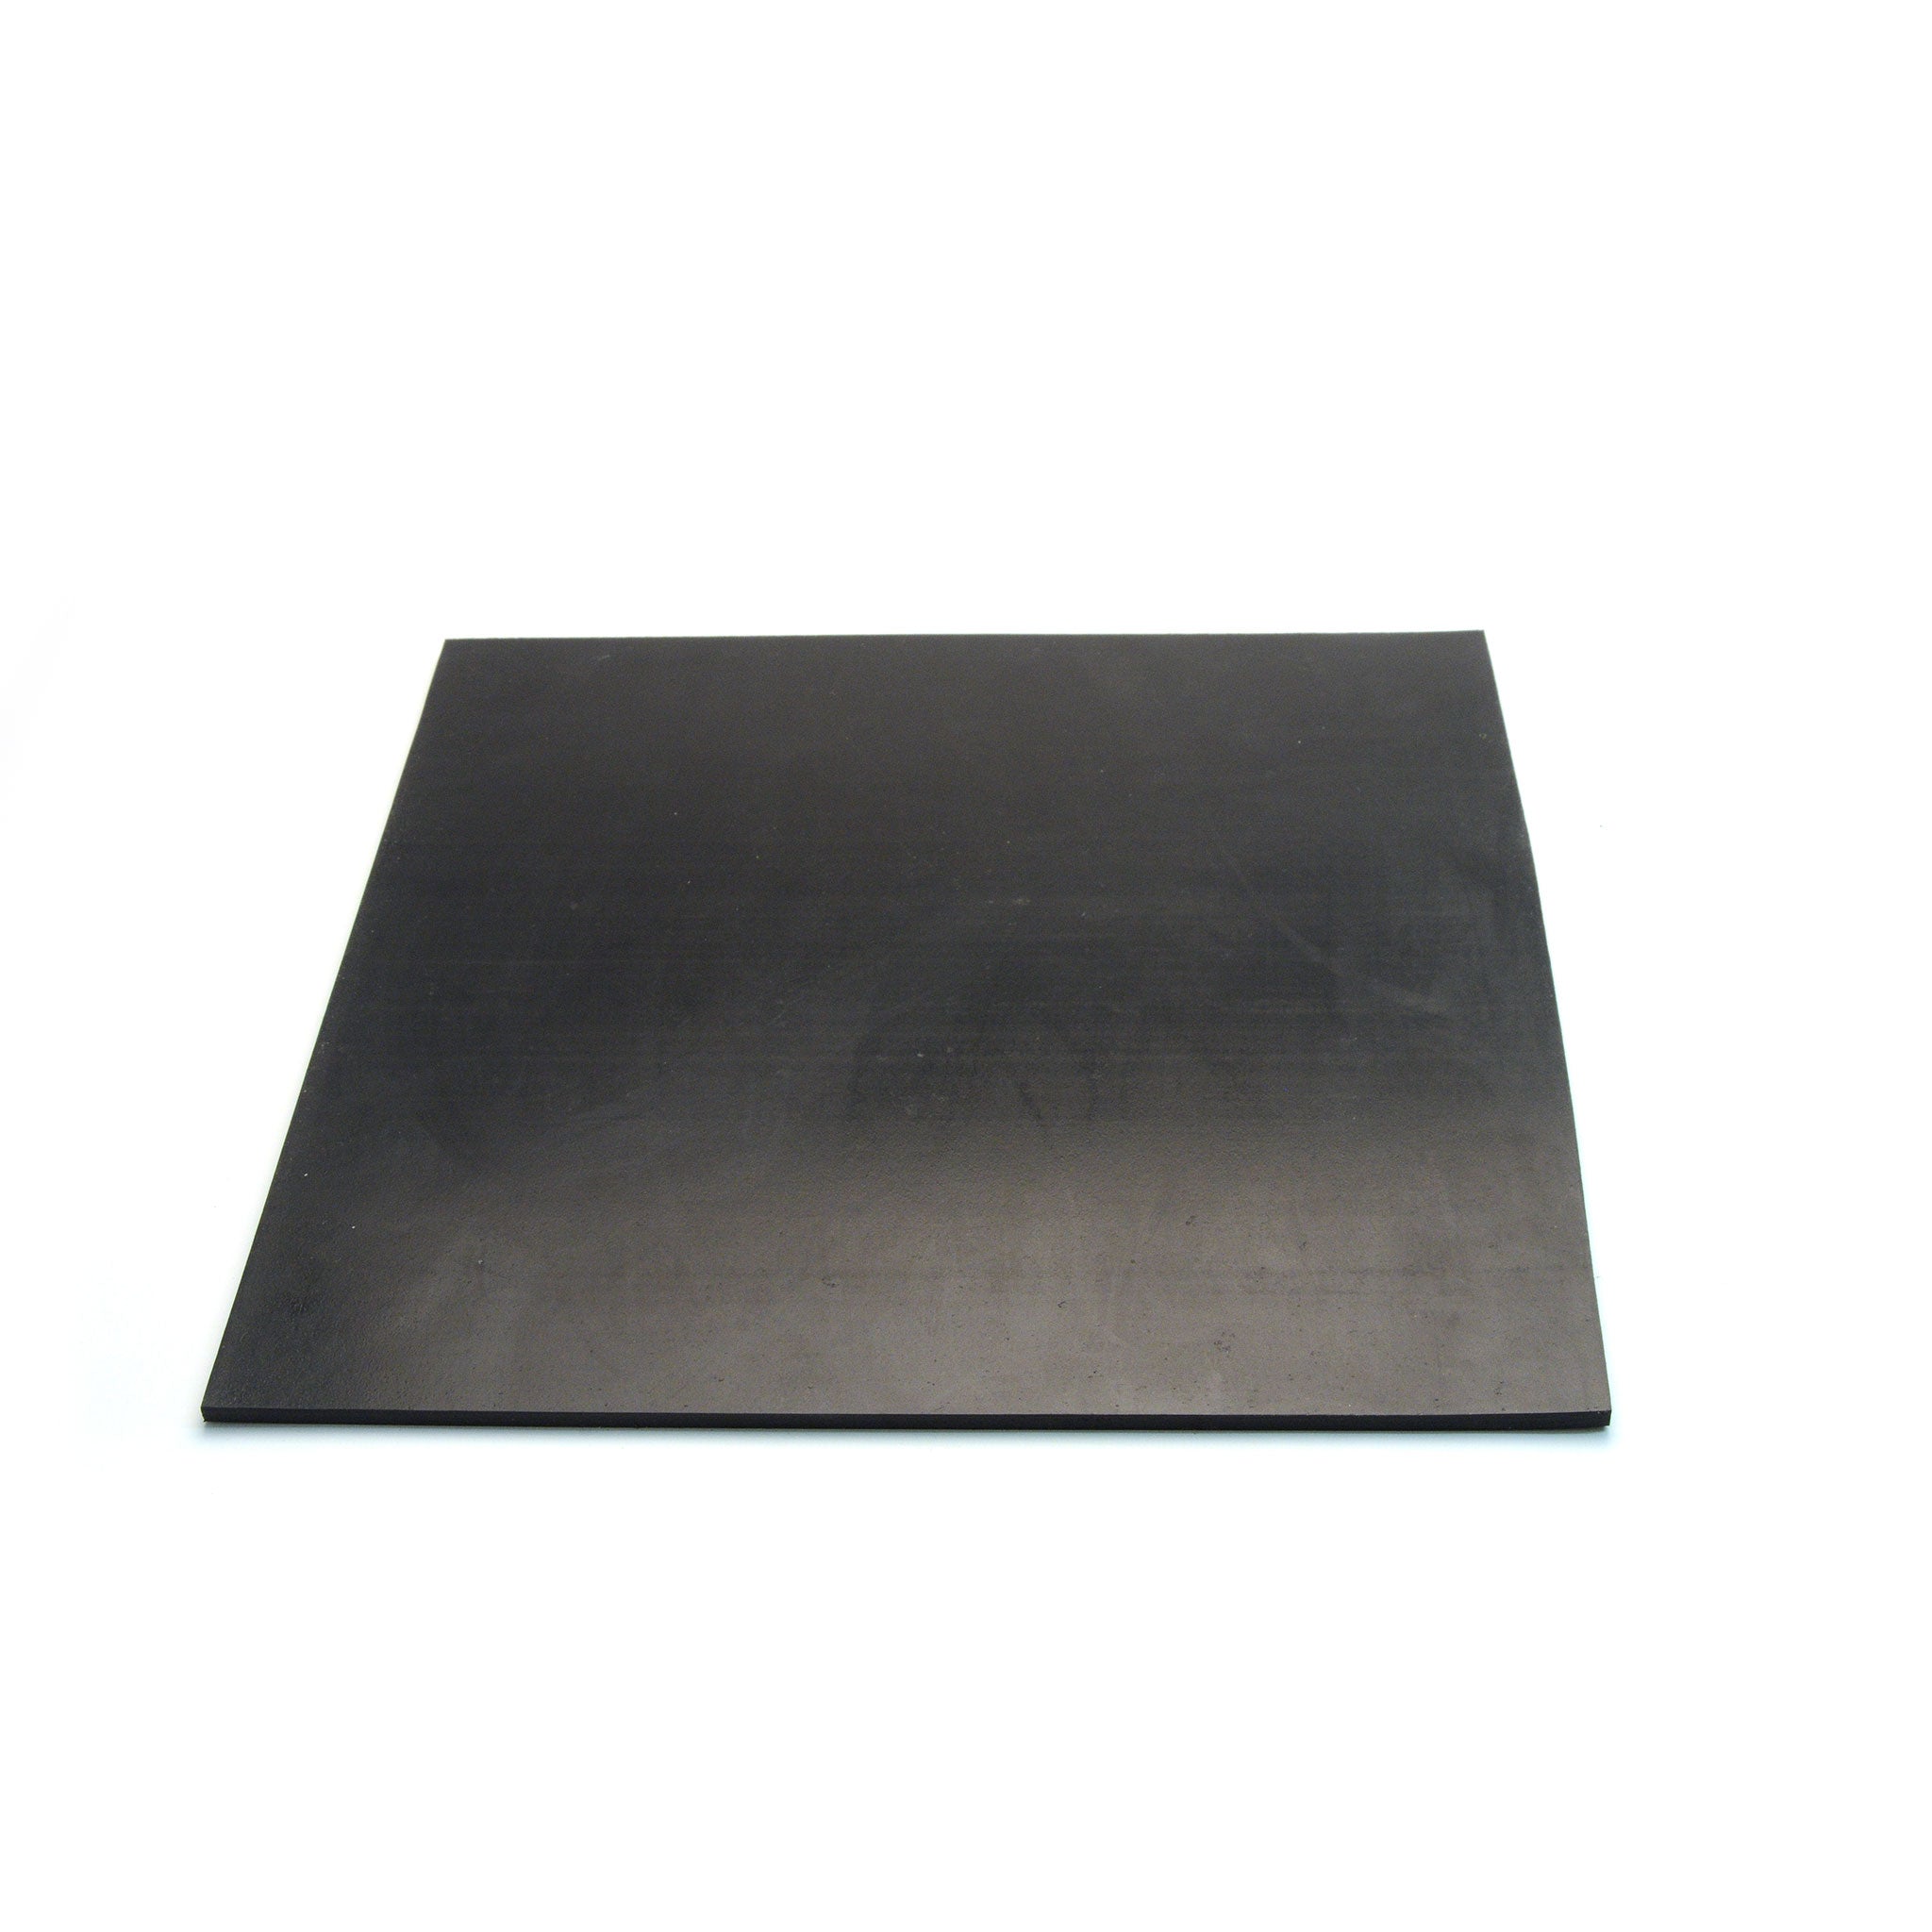 305 x 305mm Poundo Board from Identity Leathercraft